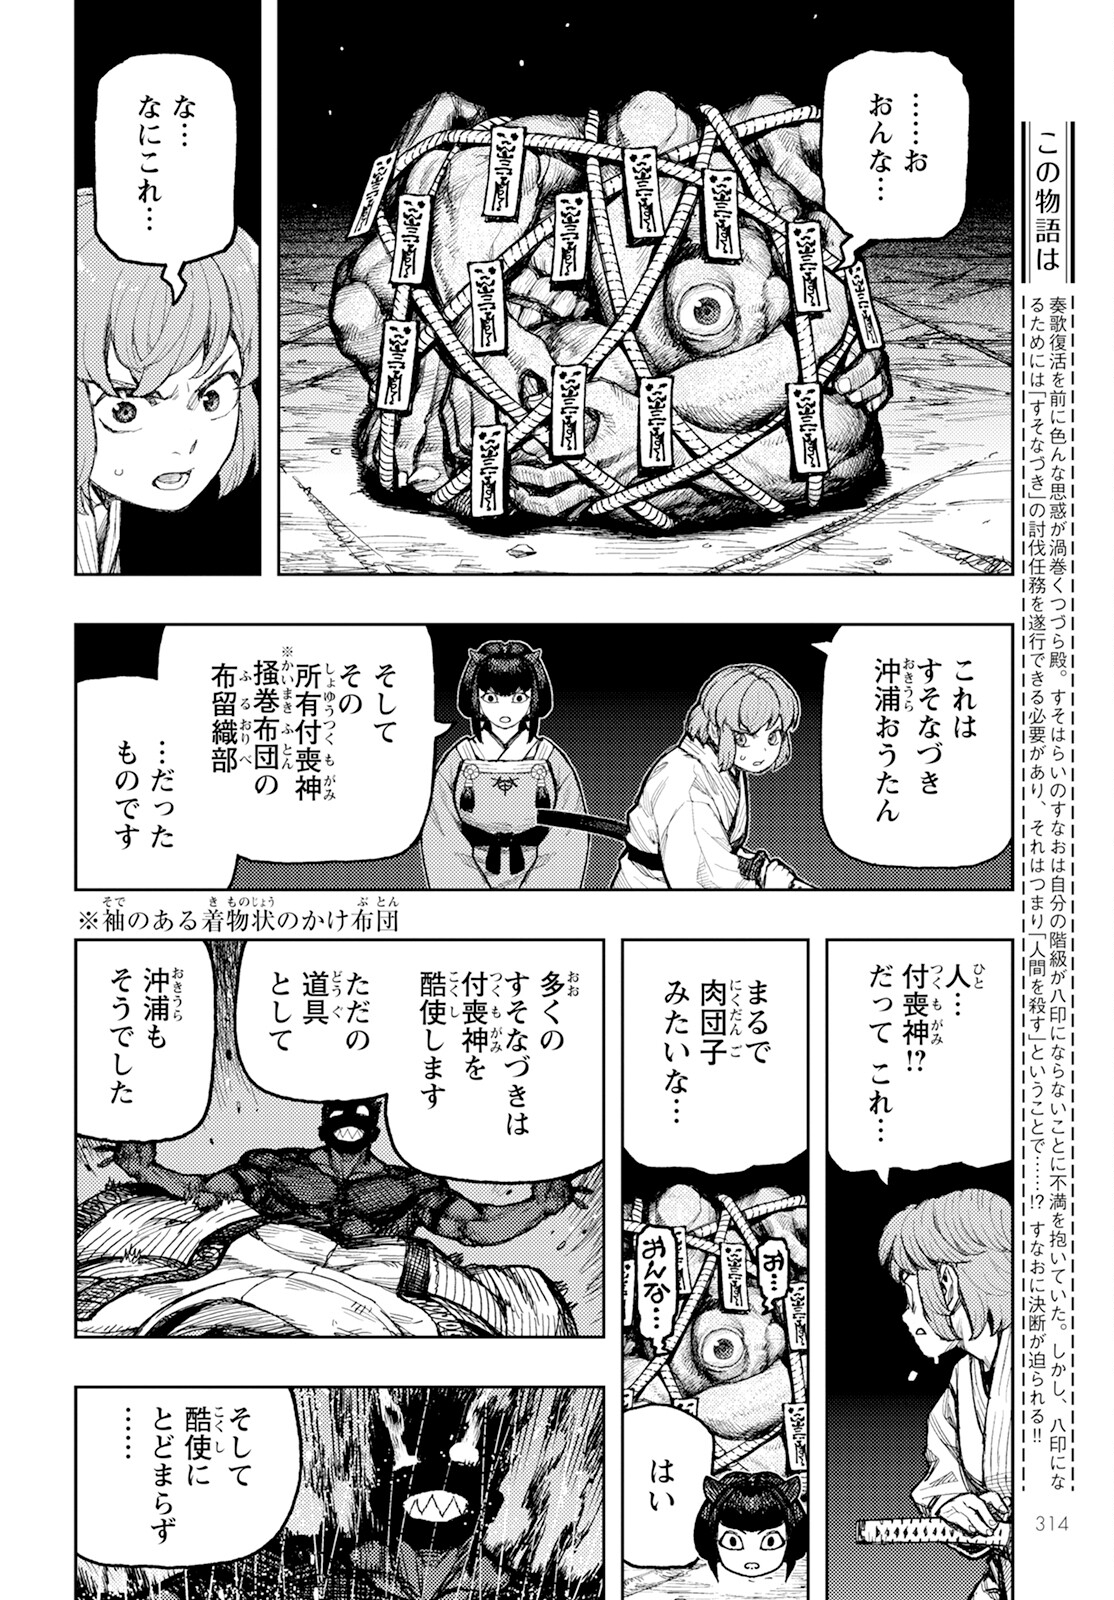 Tsugumomo - Chapter 163 - Page 2